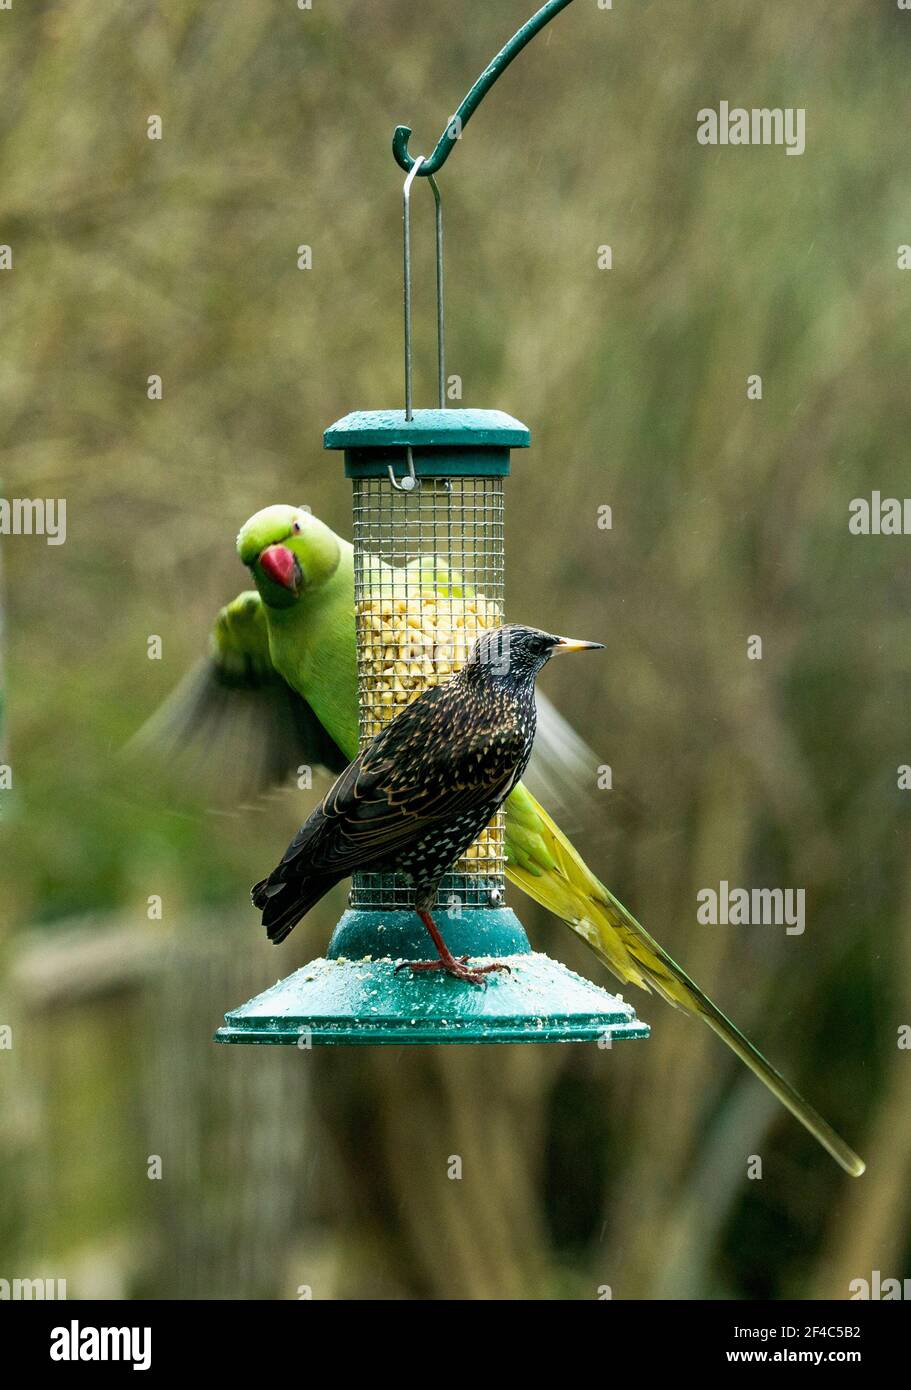 Rose-ringed or ring-necked parakeet (Psittacula krameri) and a Starlings (Sturnus vulgaris) on bird feeder in urban garden.  London, UK. Stock Photo